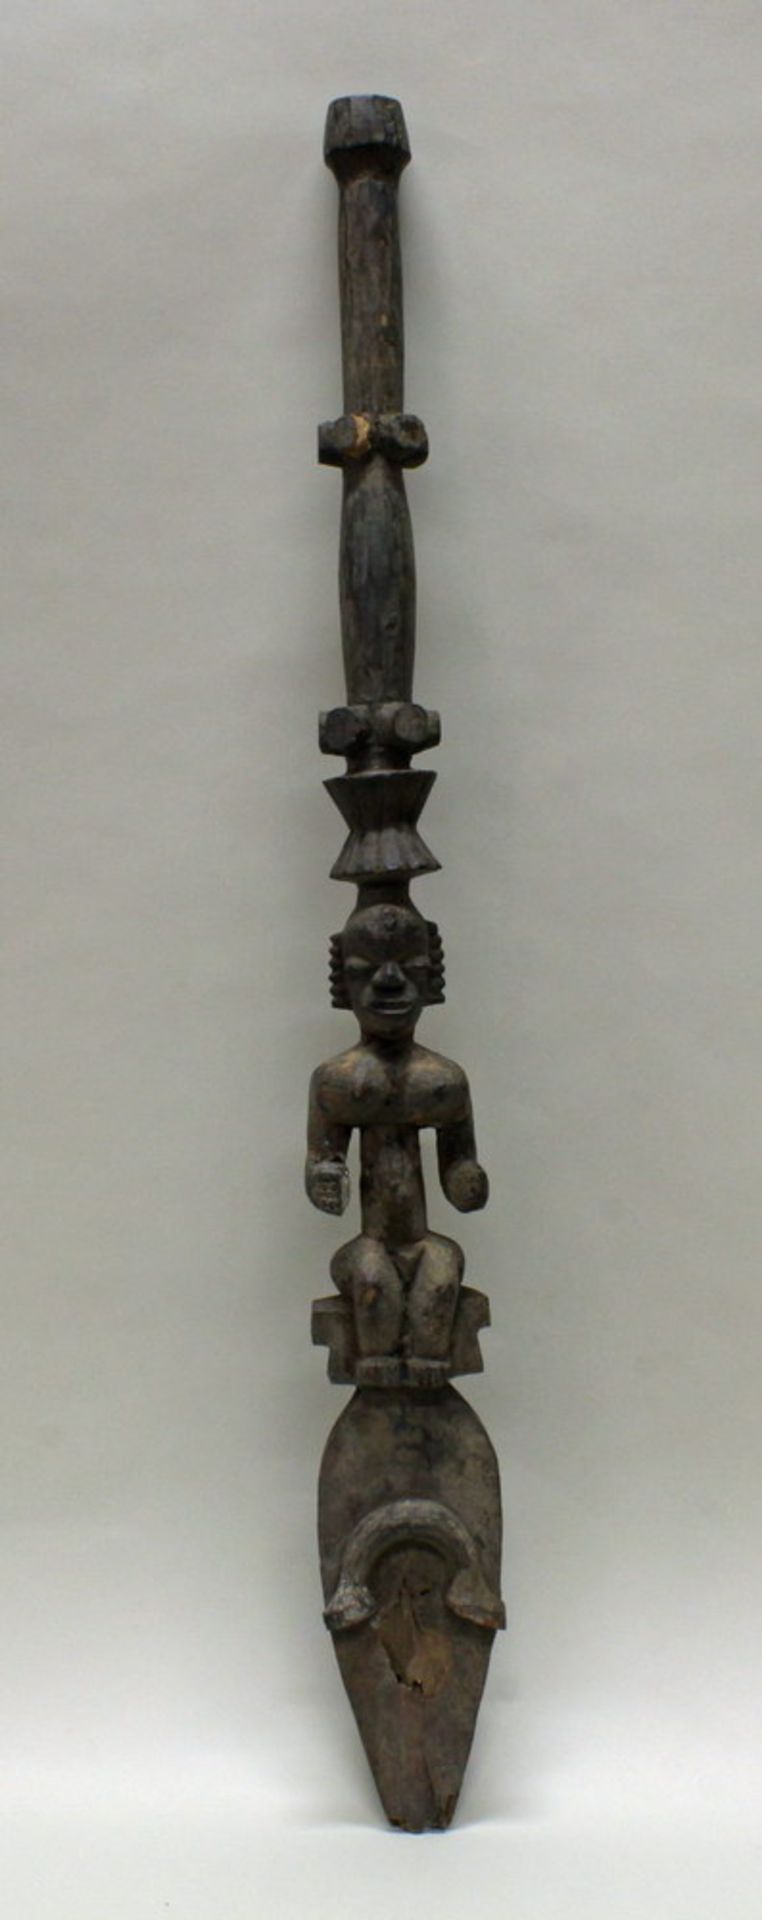 2 Tanzstäbe, Ibibio/Ibo, Nigeria, Afrika, Holz, 92 cm bzw. 98 cm lang. Provenienz: Privatsammlung - Bild 4 aus 5